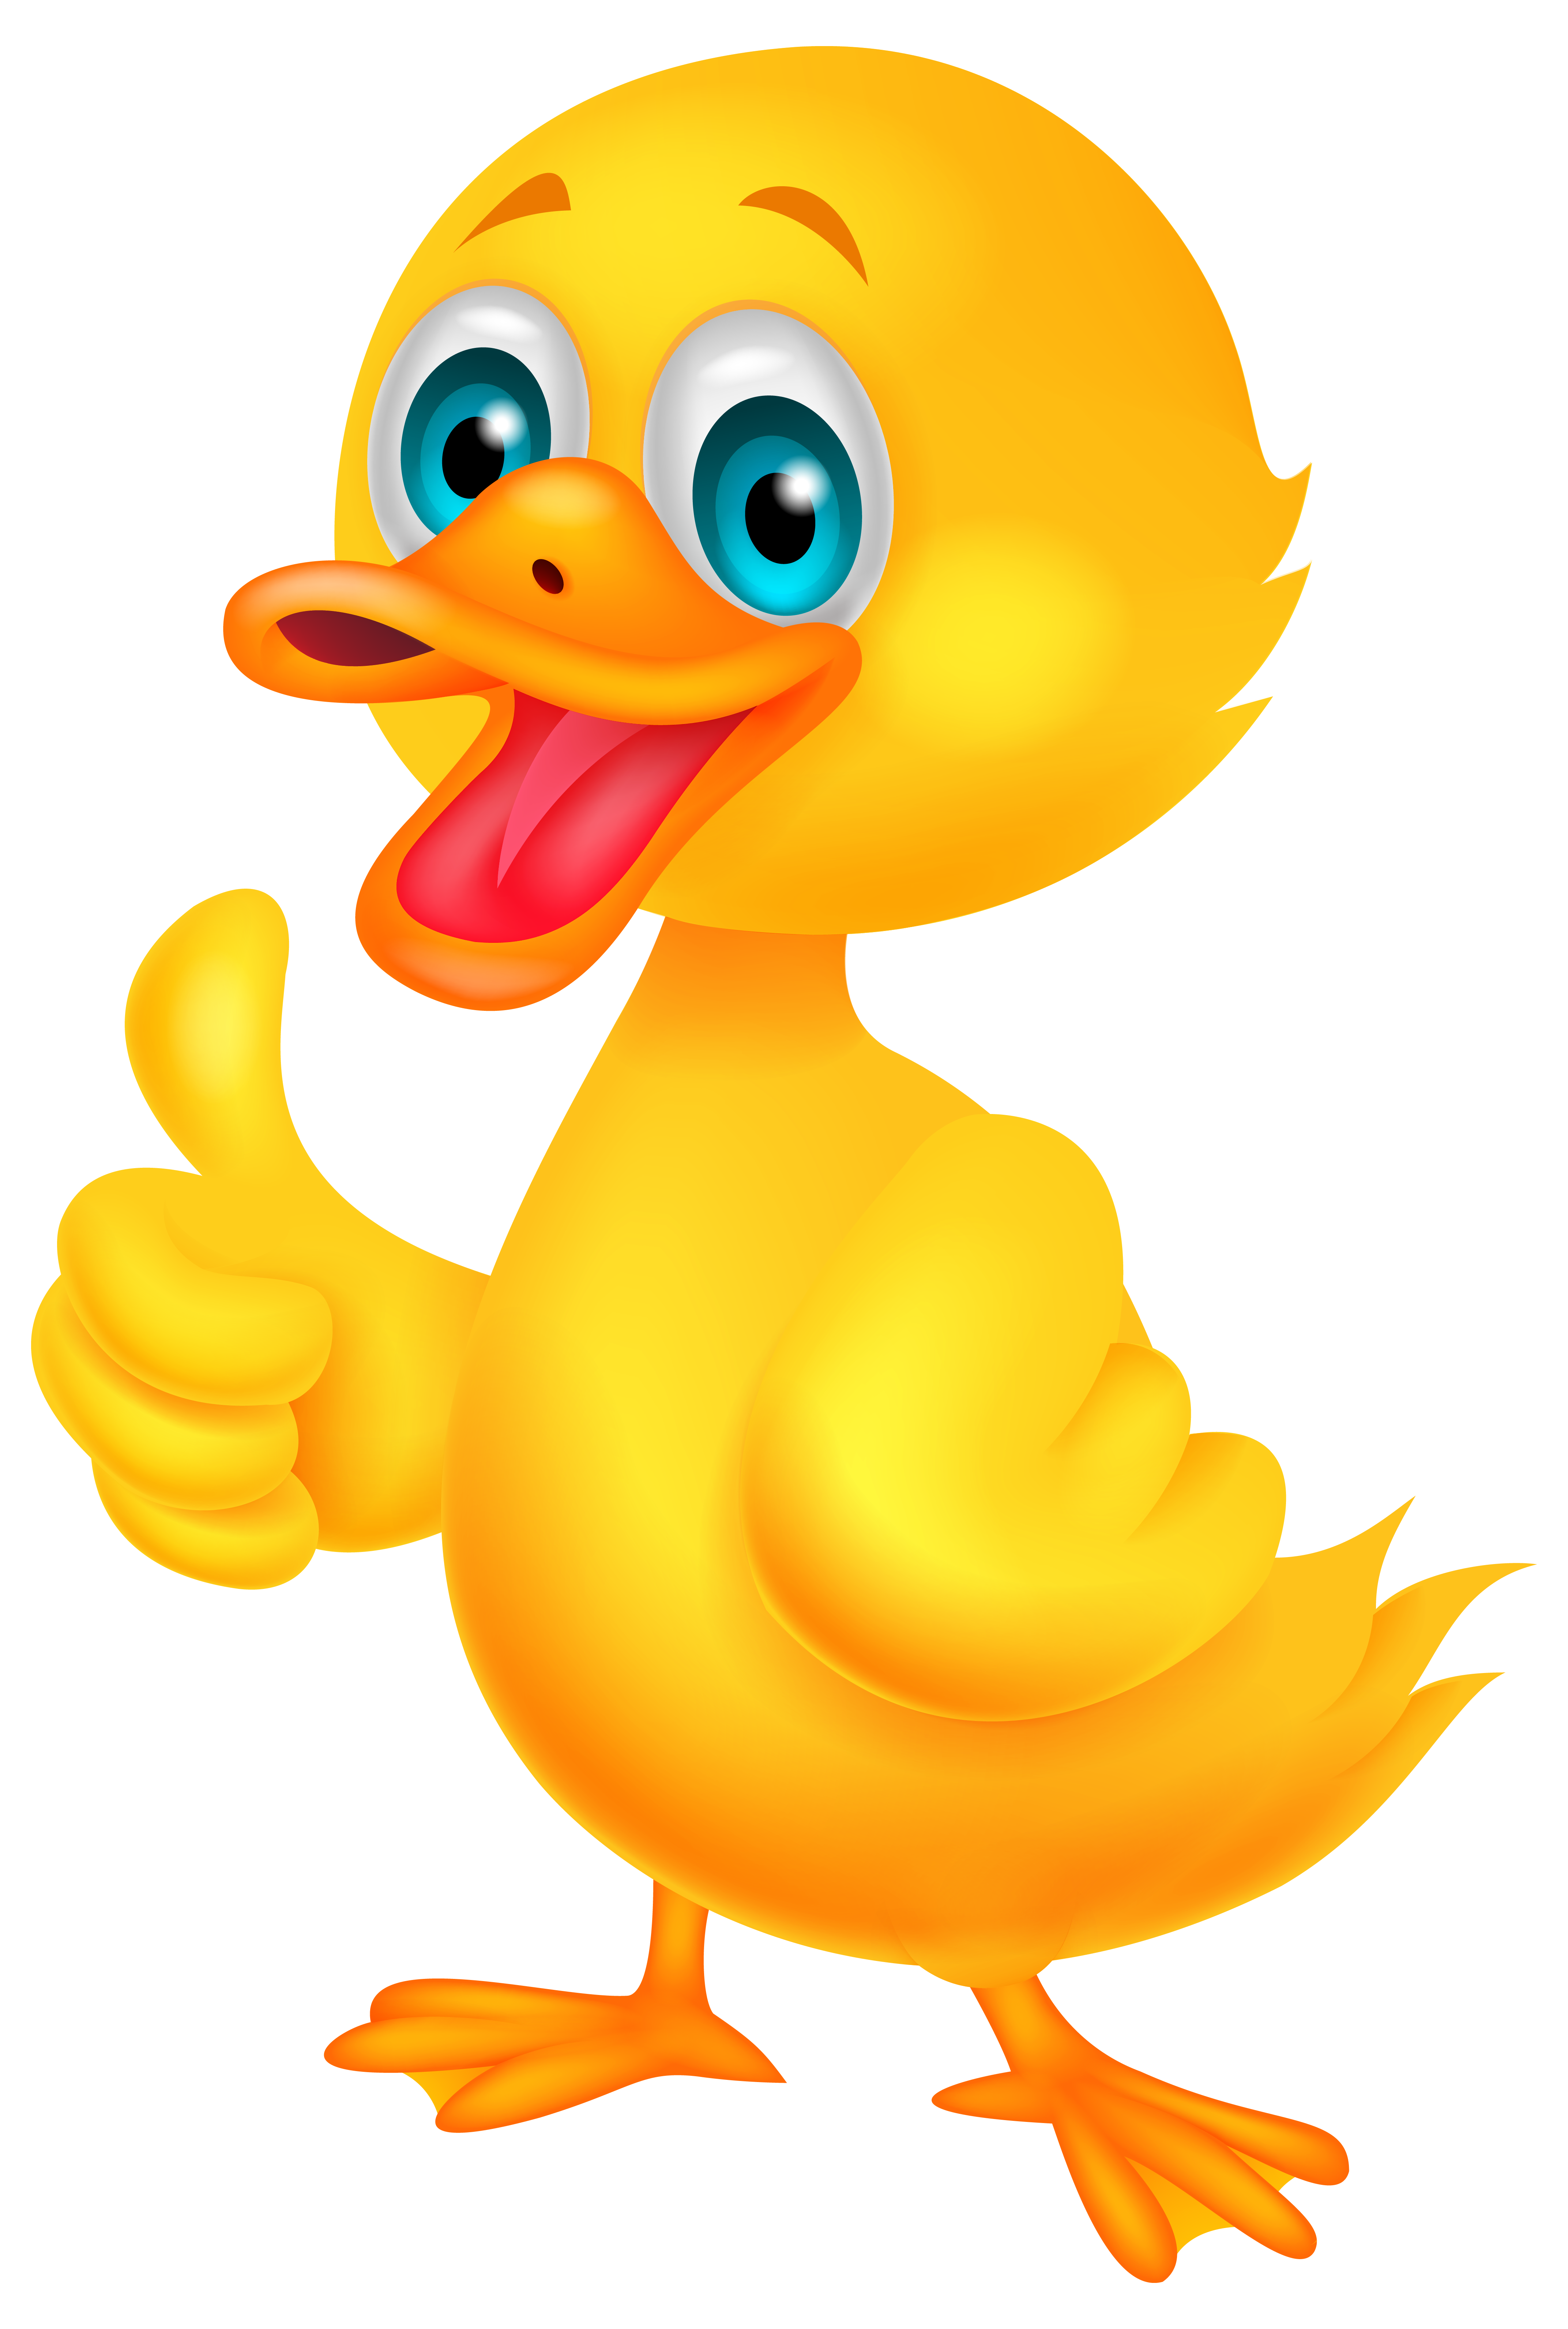 Duckling clipart cartoon. Duck toy animal yellow